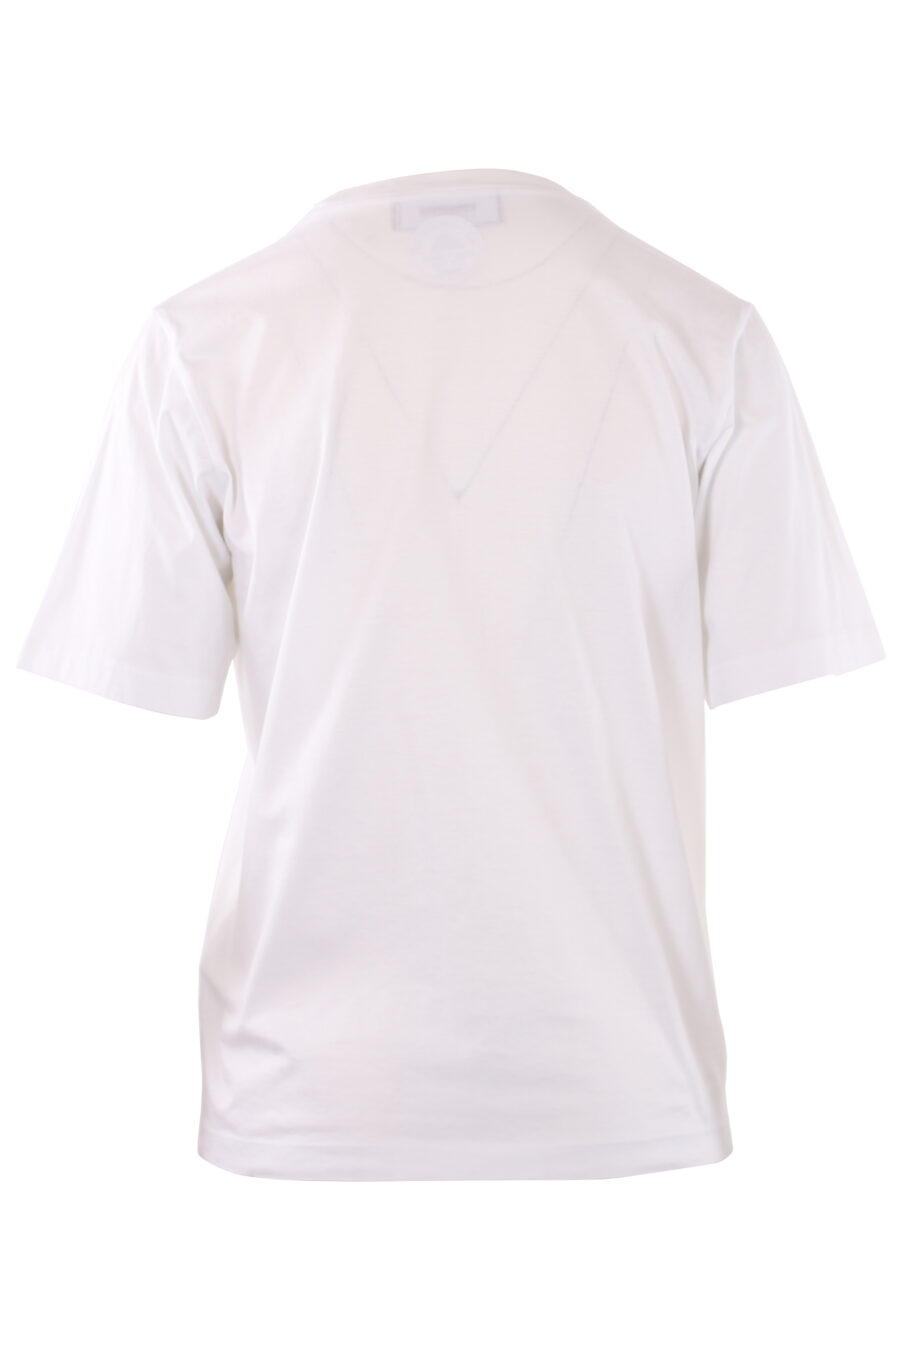 Camiseta blanca con logo "icon splash" multicolor - IMG 0256